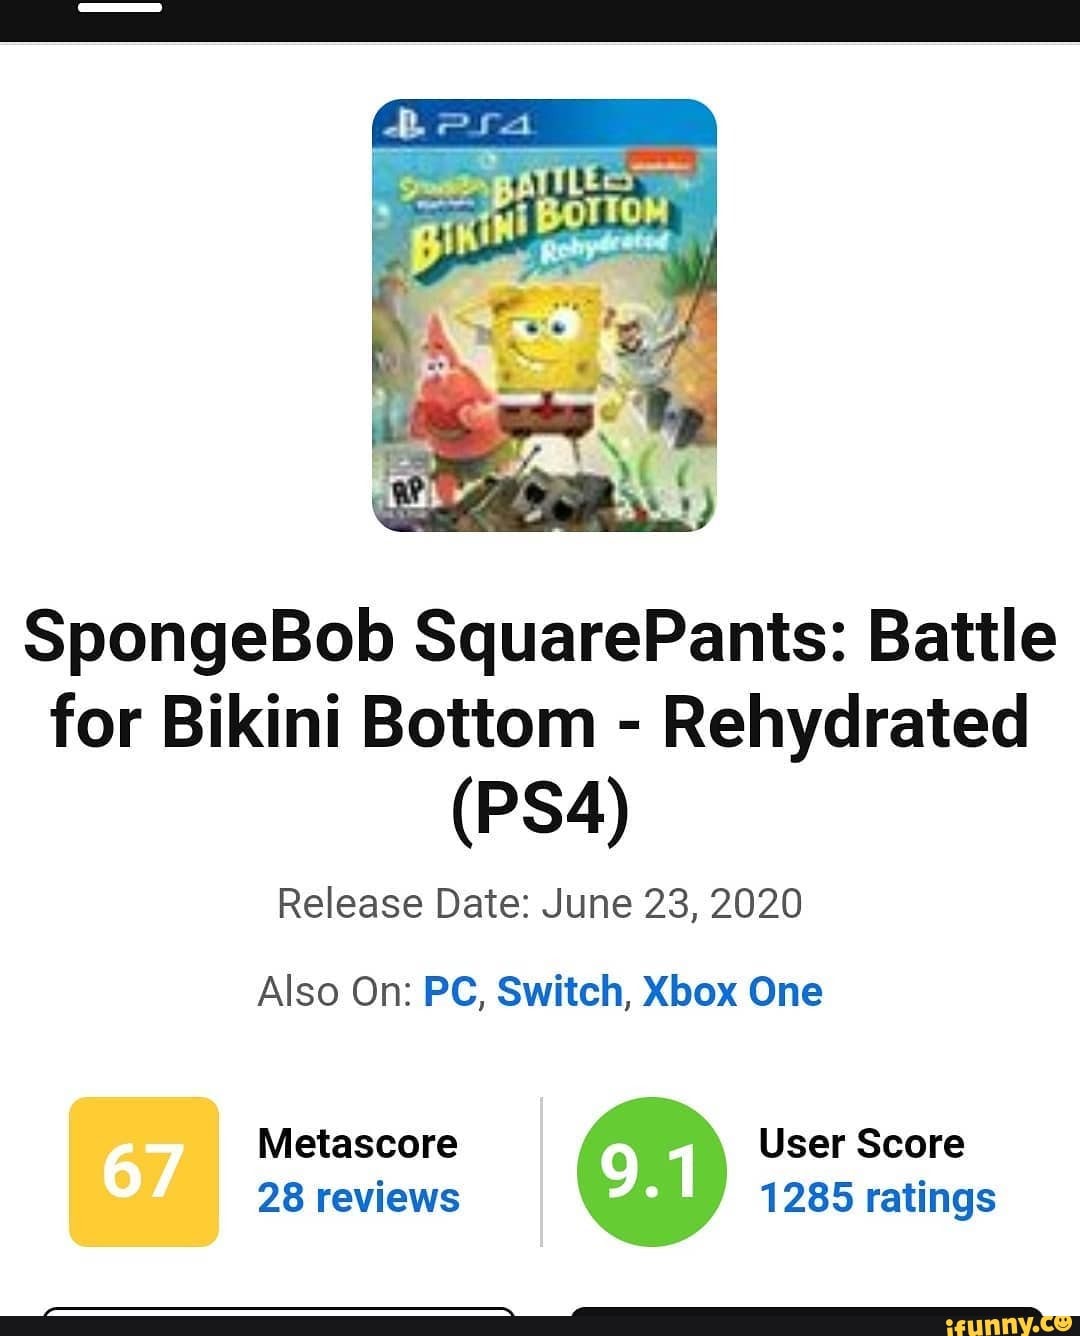 SpongeBob SquarePants: Battle for Bikini Bottom - Rehydrated Release